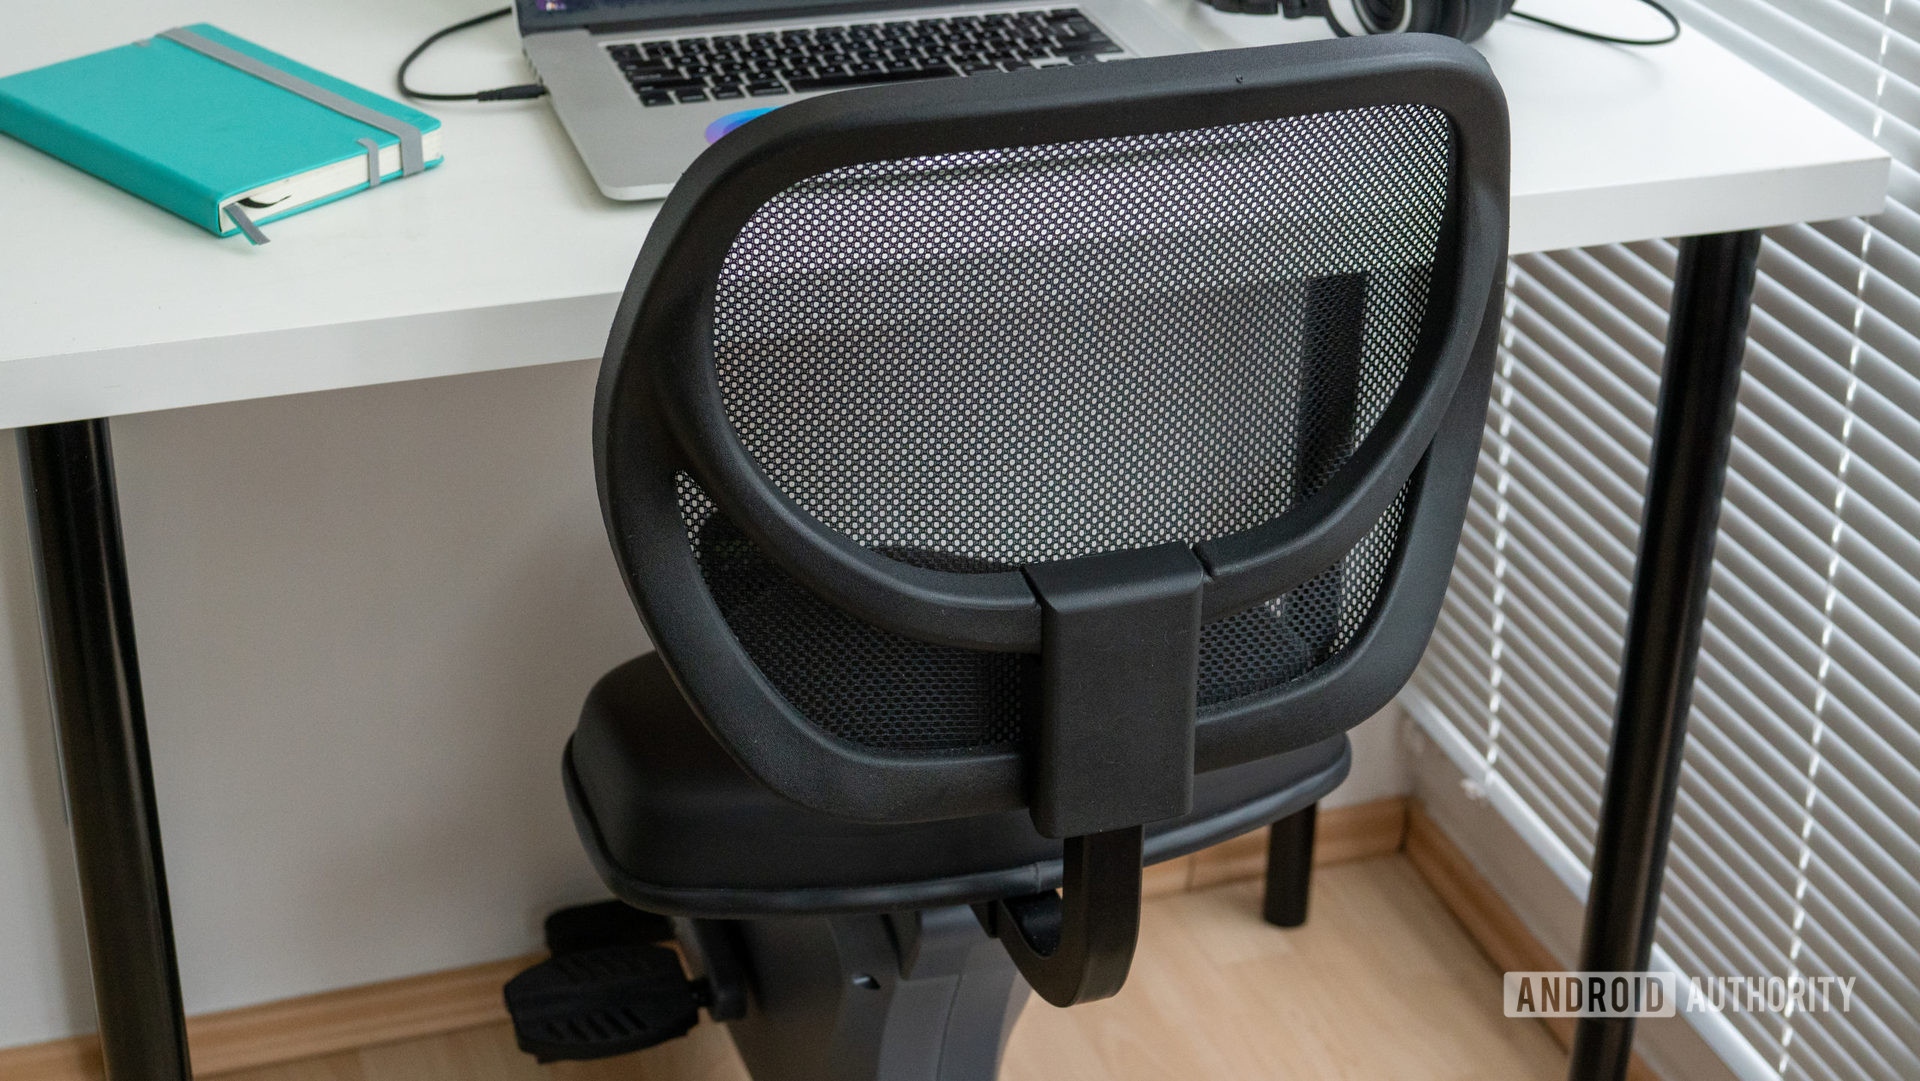 Flexispot Sit2Go Pro fitness chair desk cycle mesh back rest closeup 